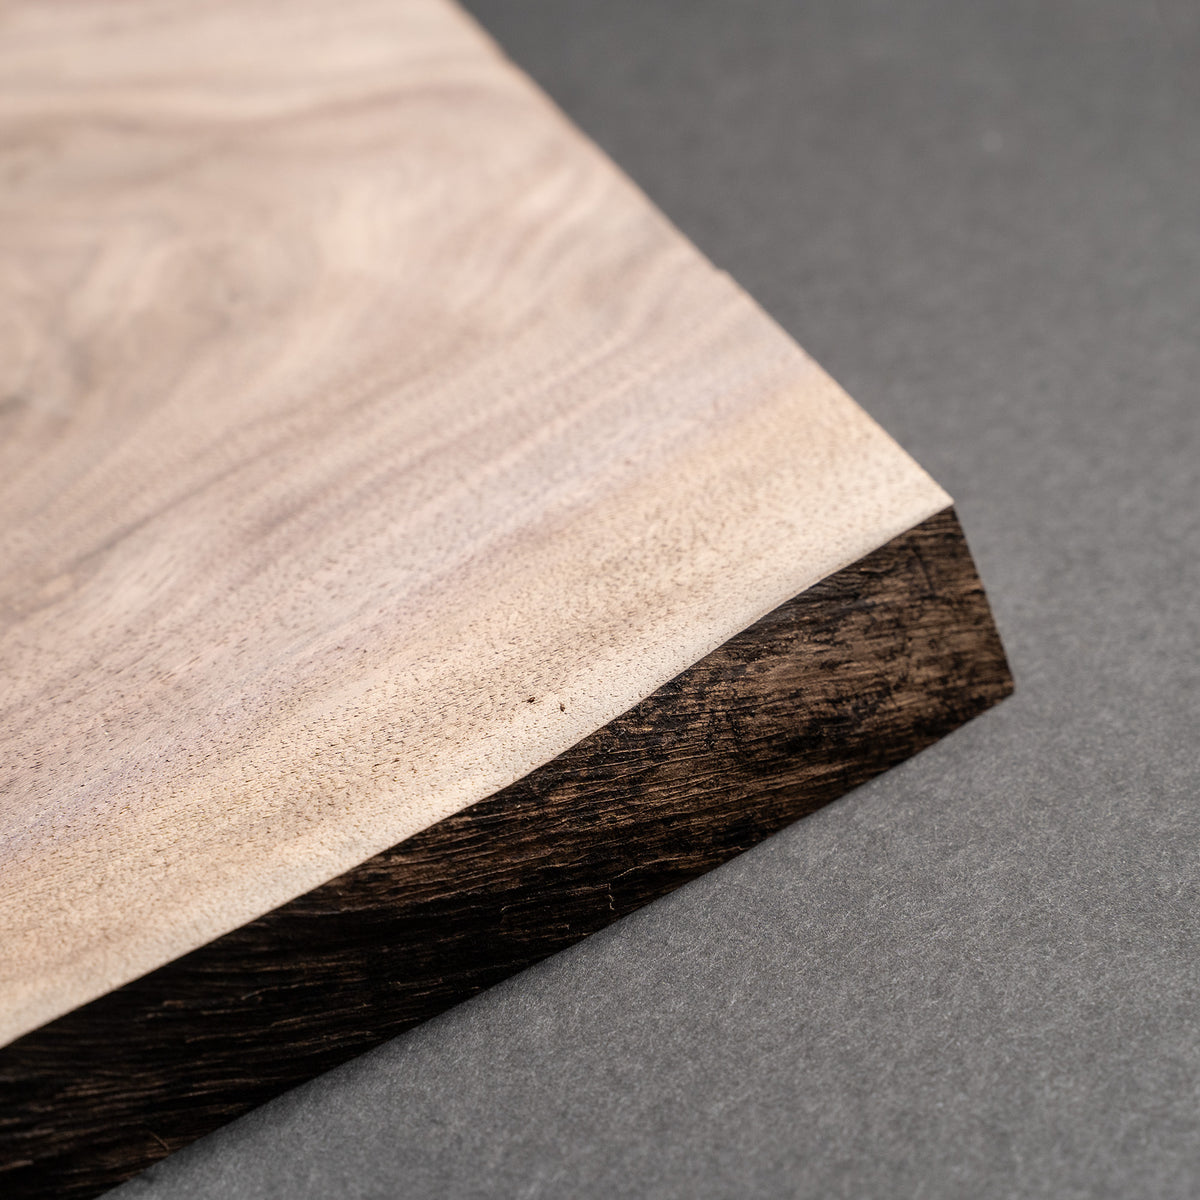 4/4 1” Live Edge Black Walnut Boards Wood - Kiln Dried Dimensional Lumber - Cut to Size - DIY Project wood board - Floating Shelf Boards